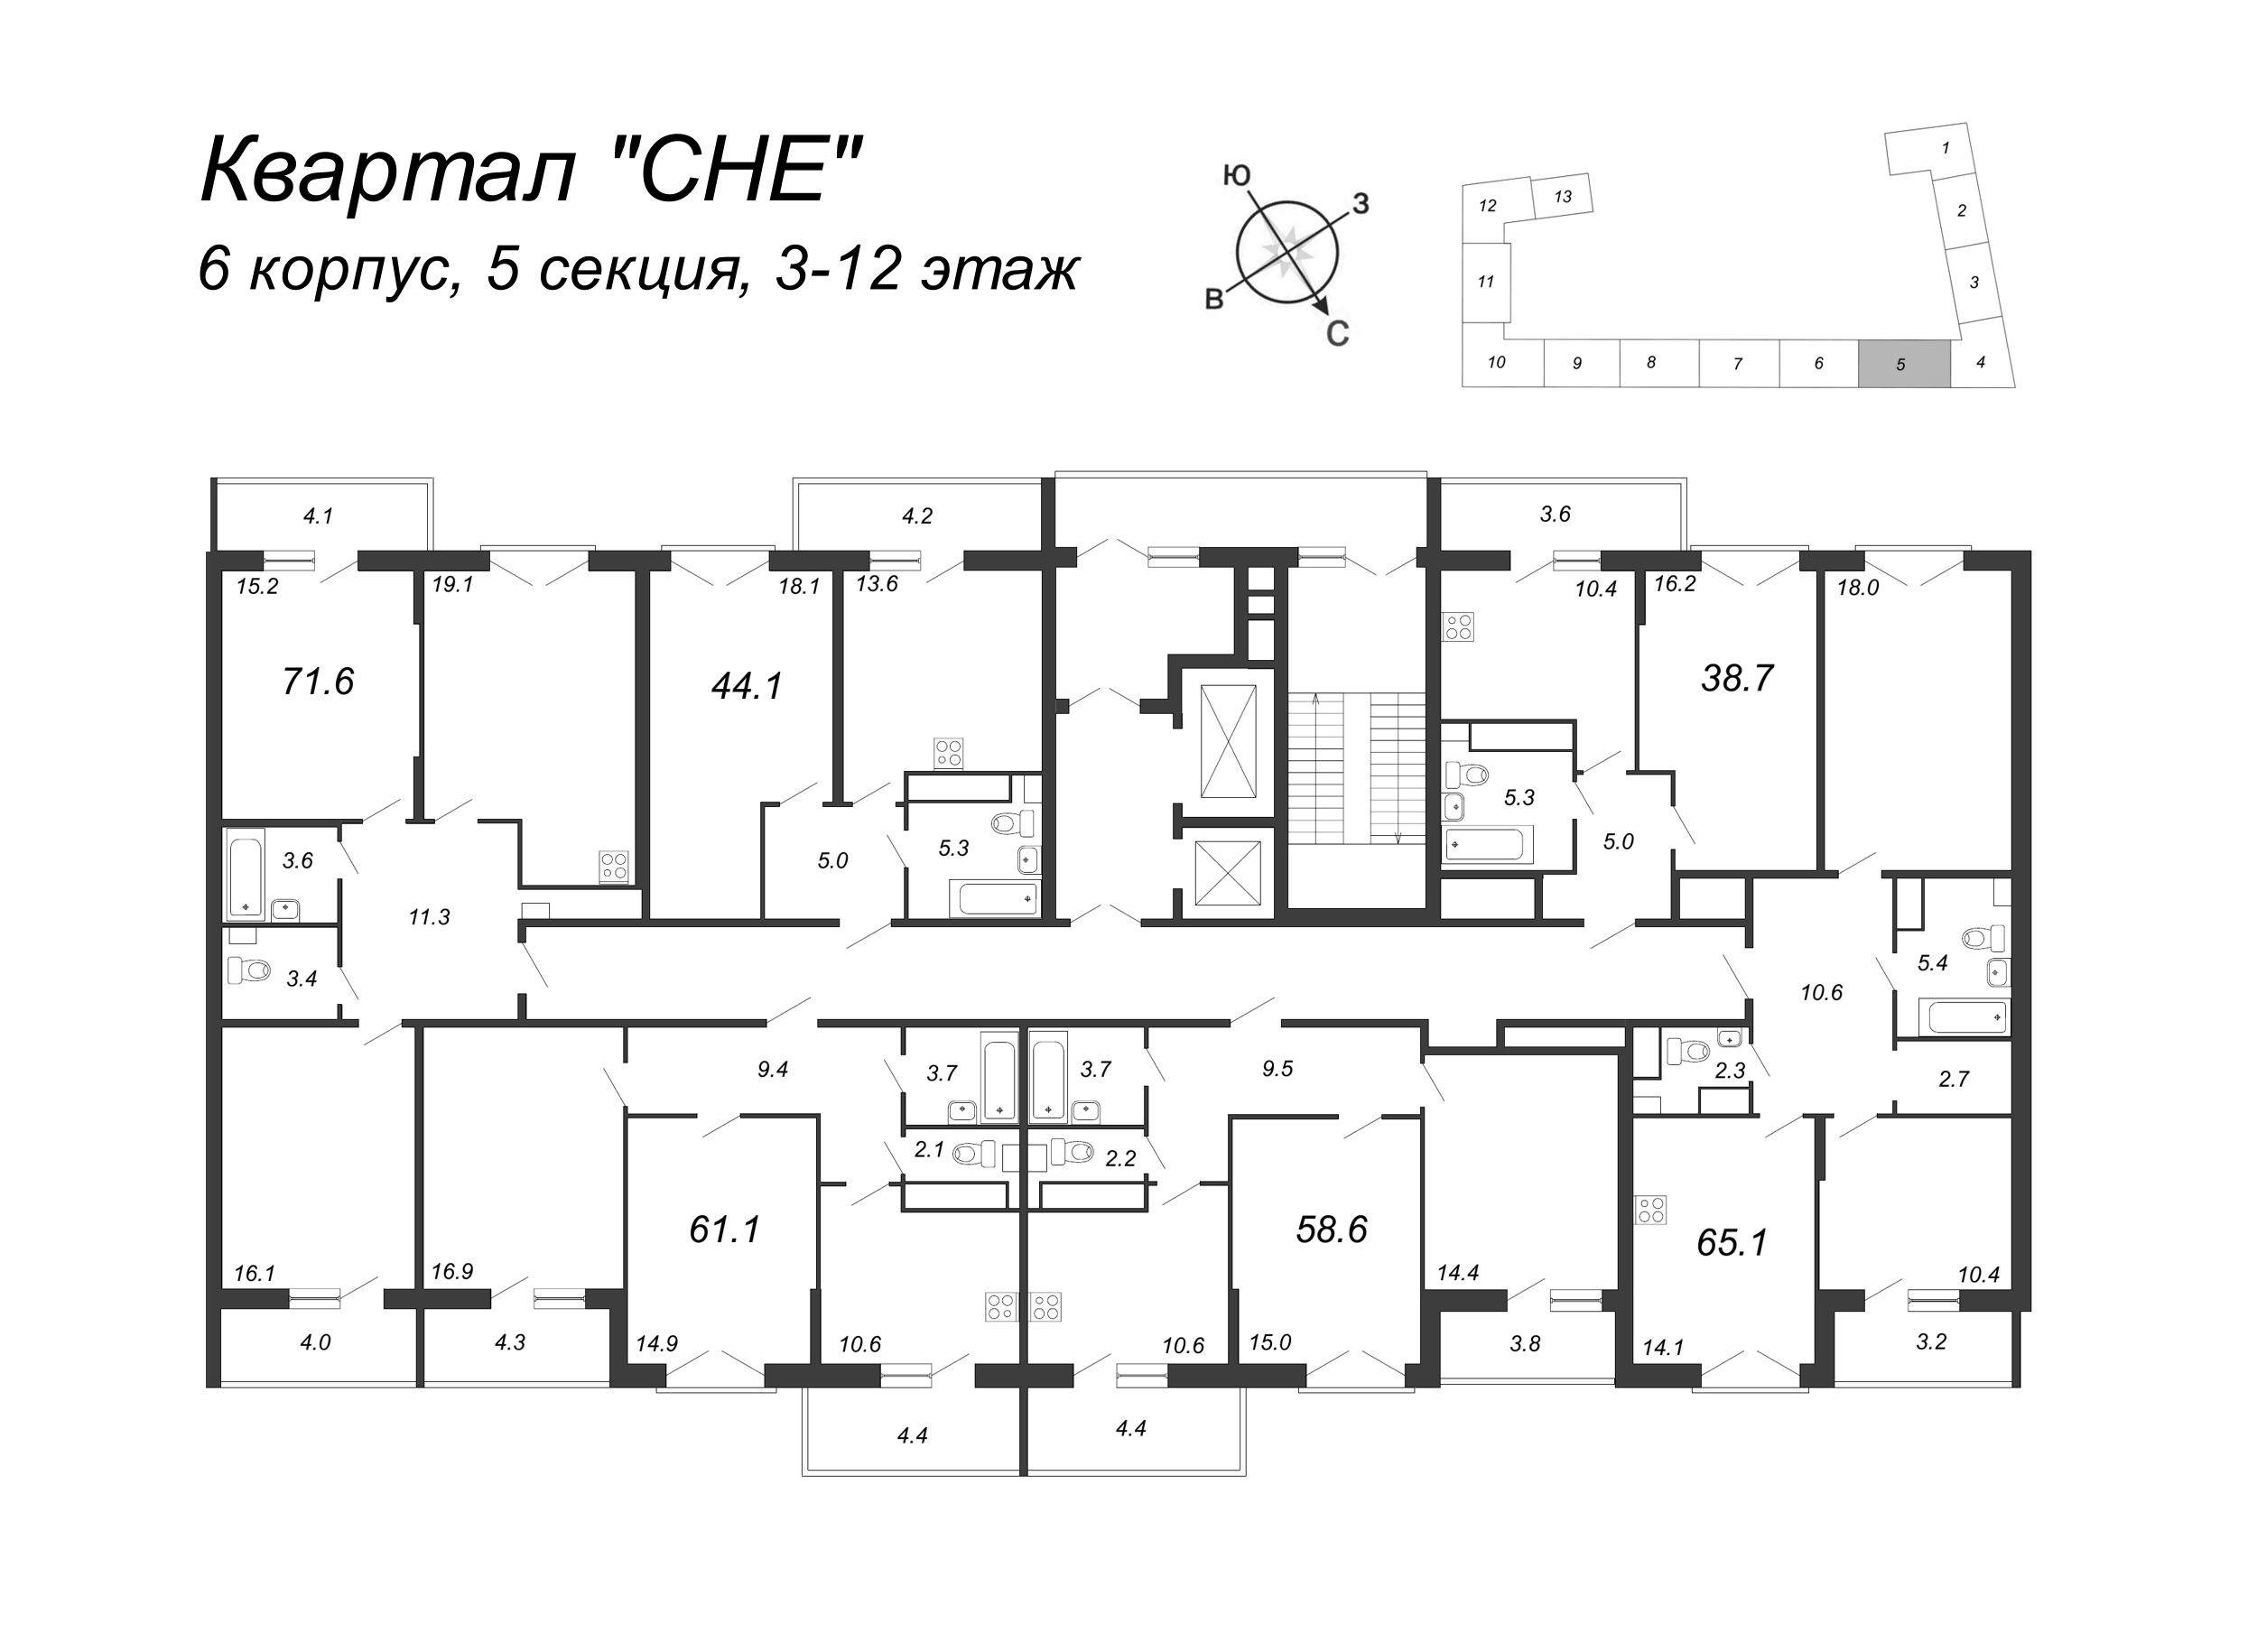 2-комнатная квартира, 66.9 м² в ЖК "Квартал Che" - планировка этажа